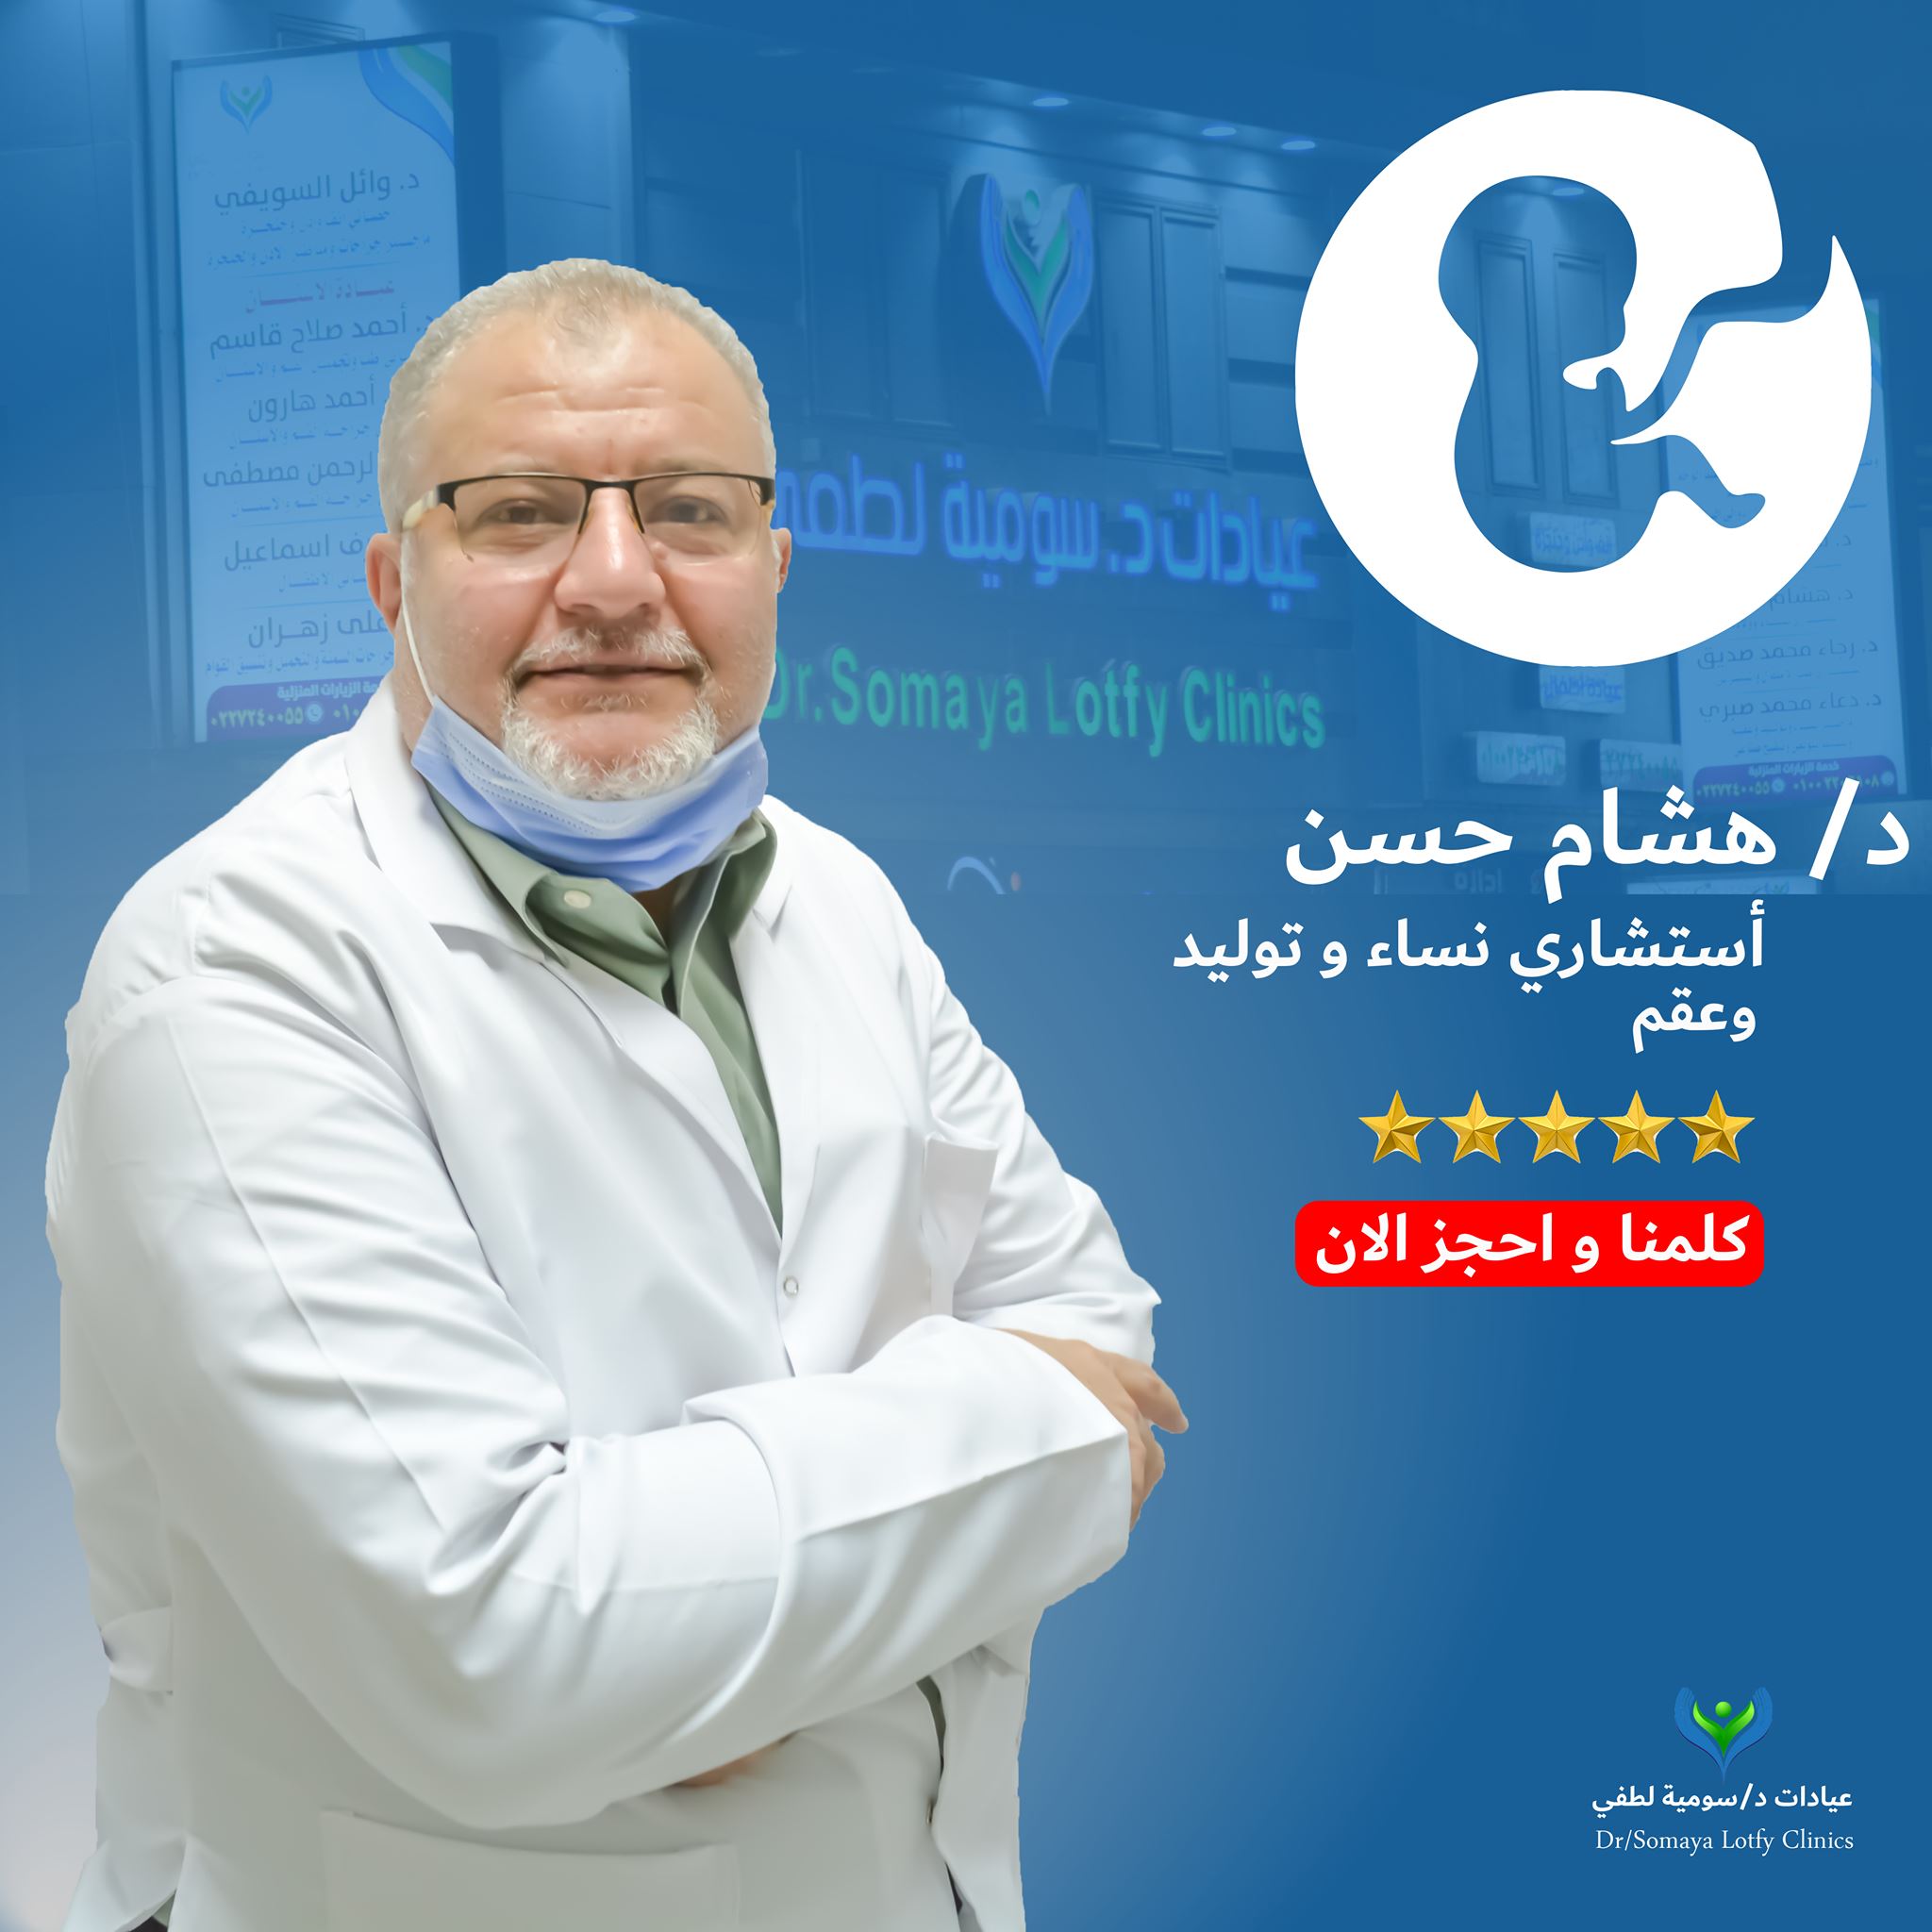 Dr. Hesham Hassan